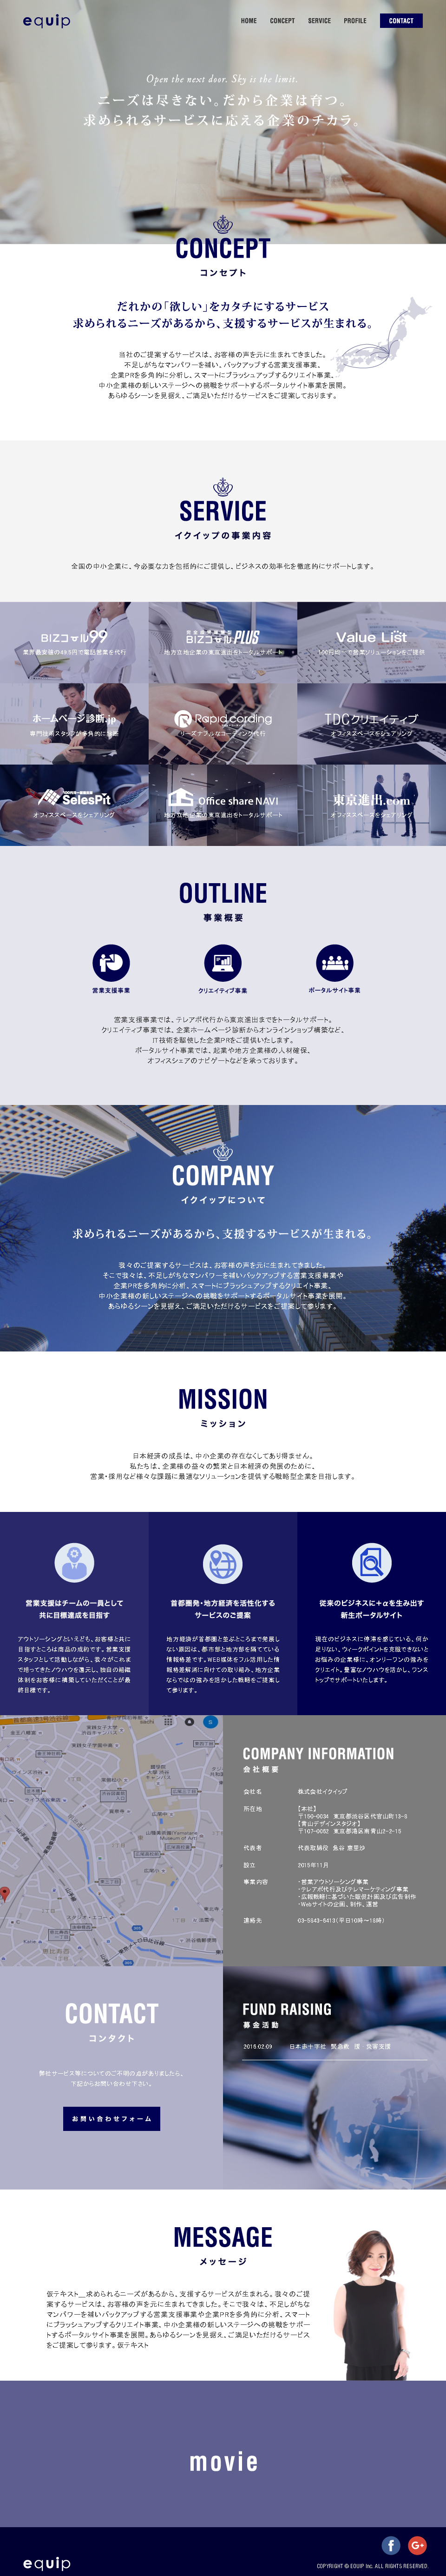 company site